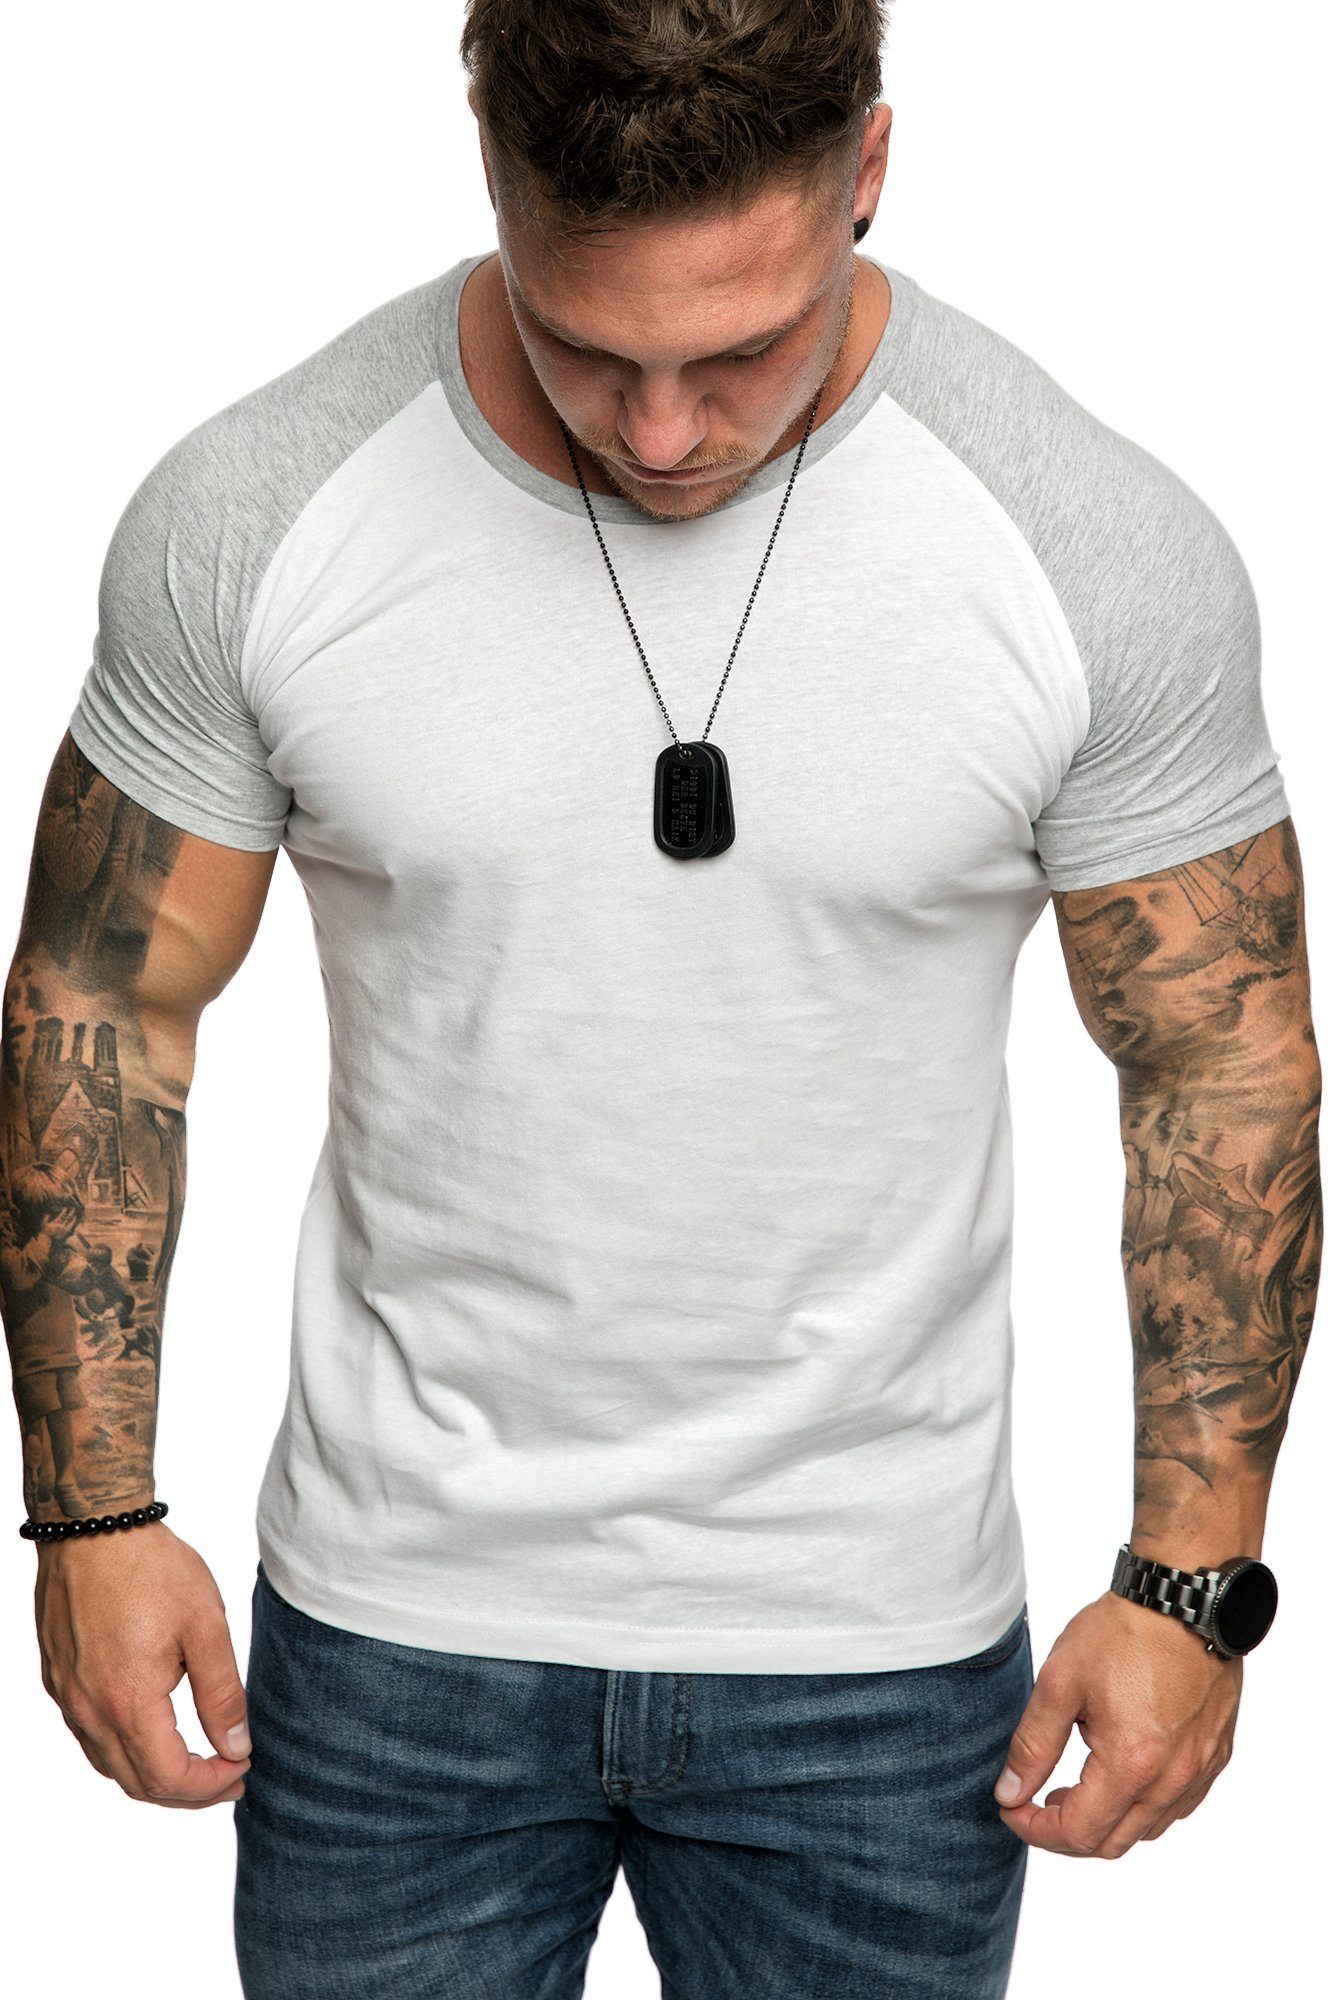 Amaci&Sons mit SALEM T-Shirt Raglan Shirt Weiß/Grau Rundhalsausschnitt T-Shirt Basic Raglan Herren mit Basic Rundhalsausschnitt